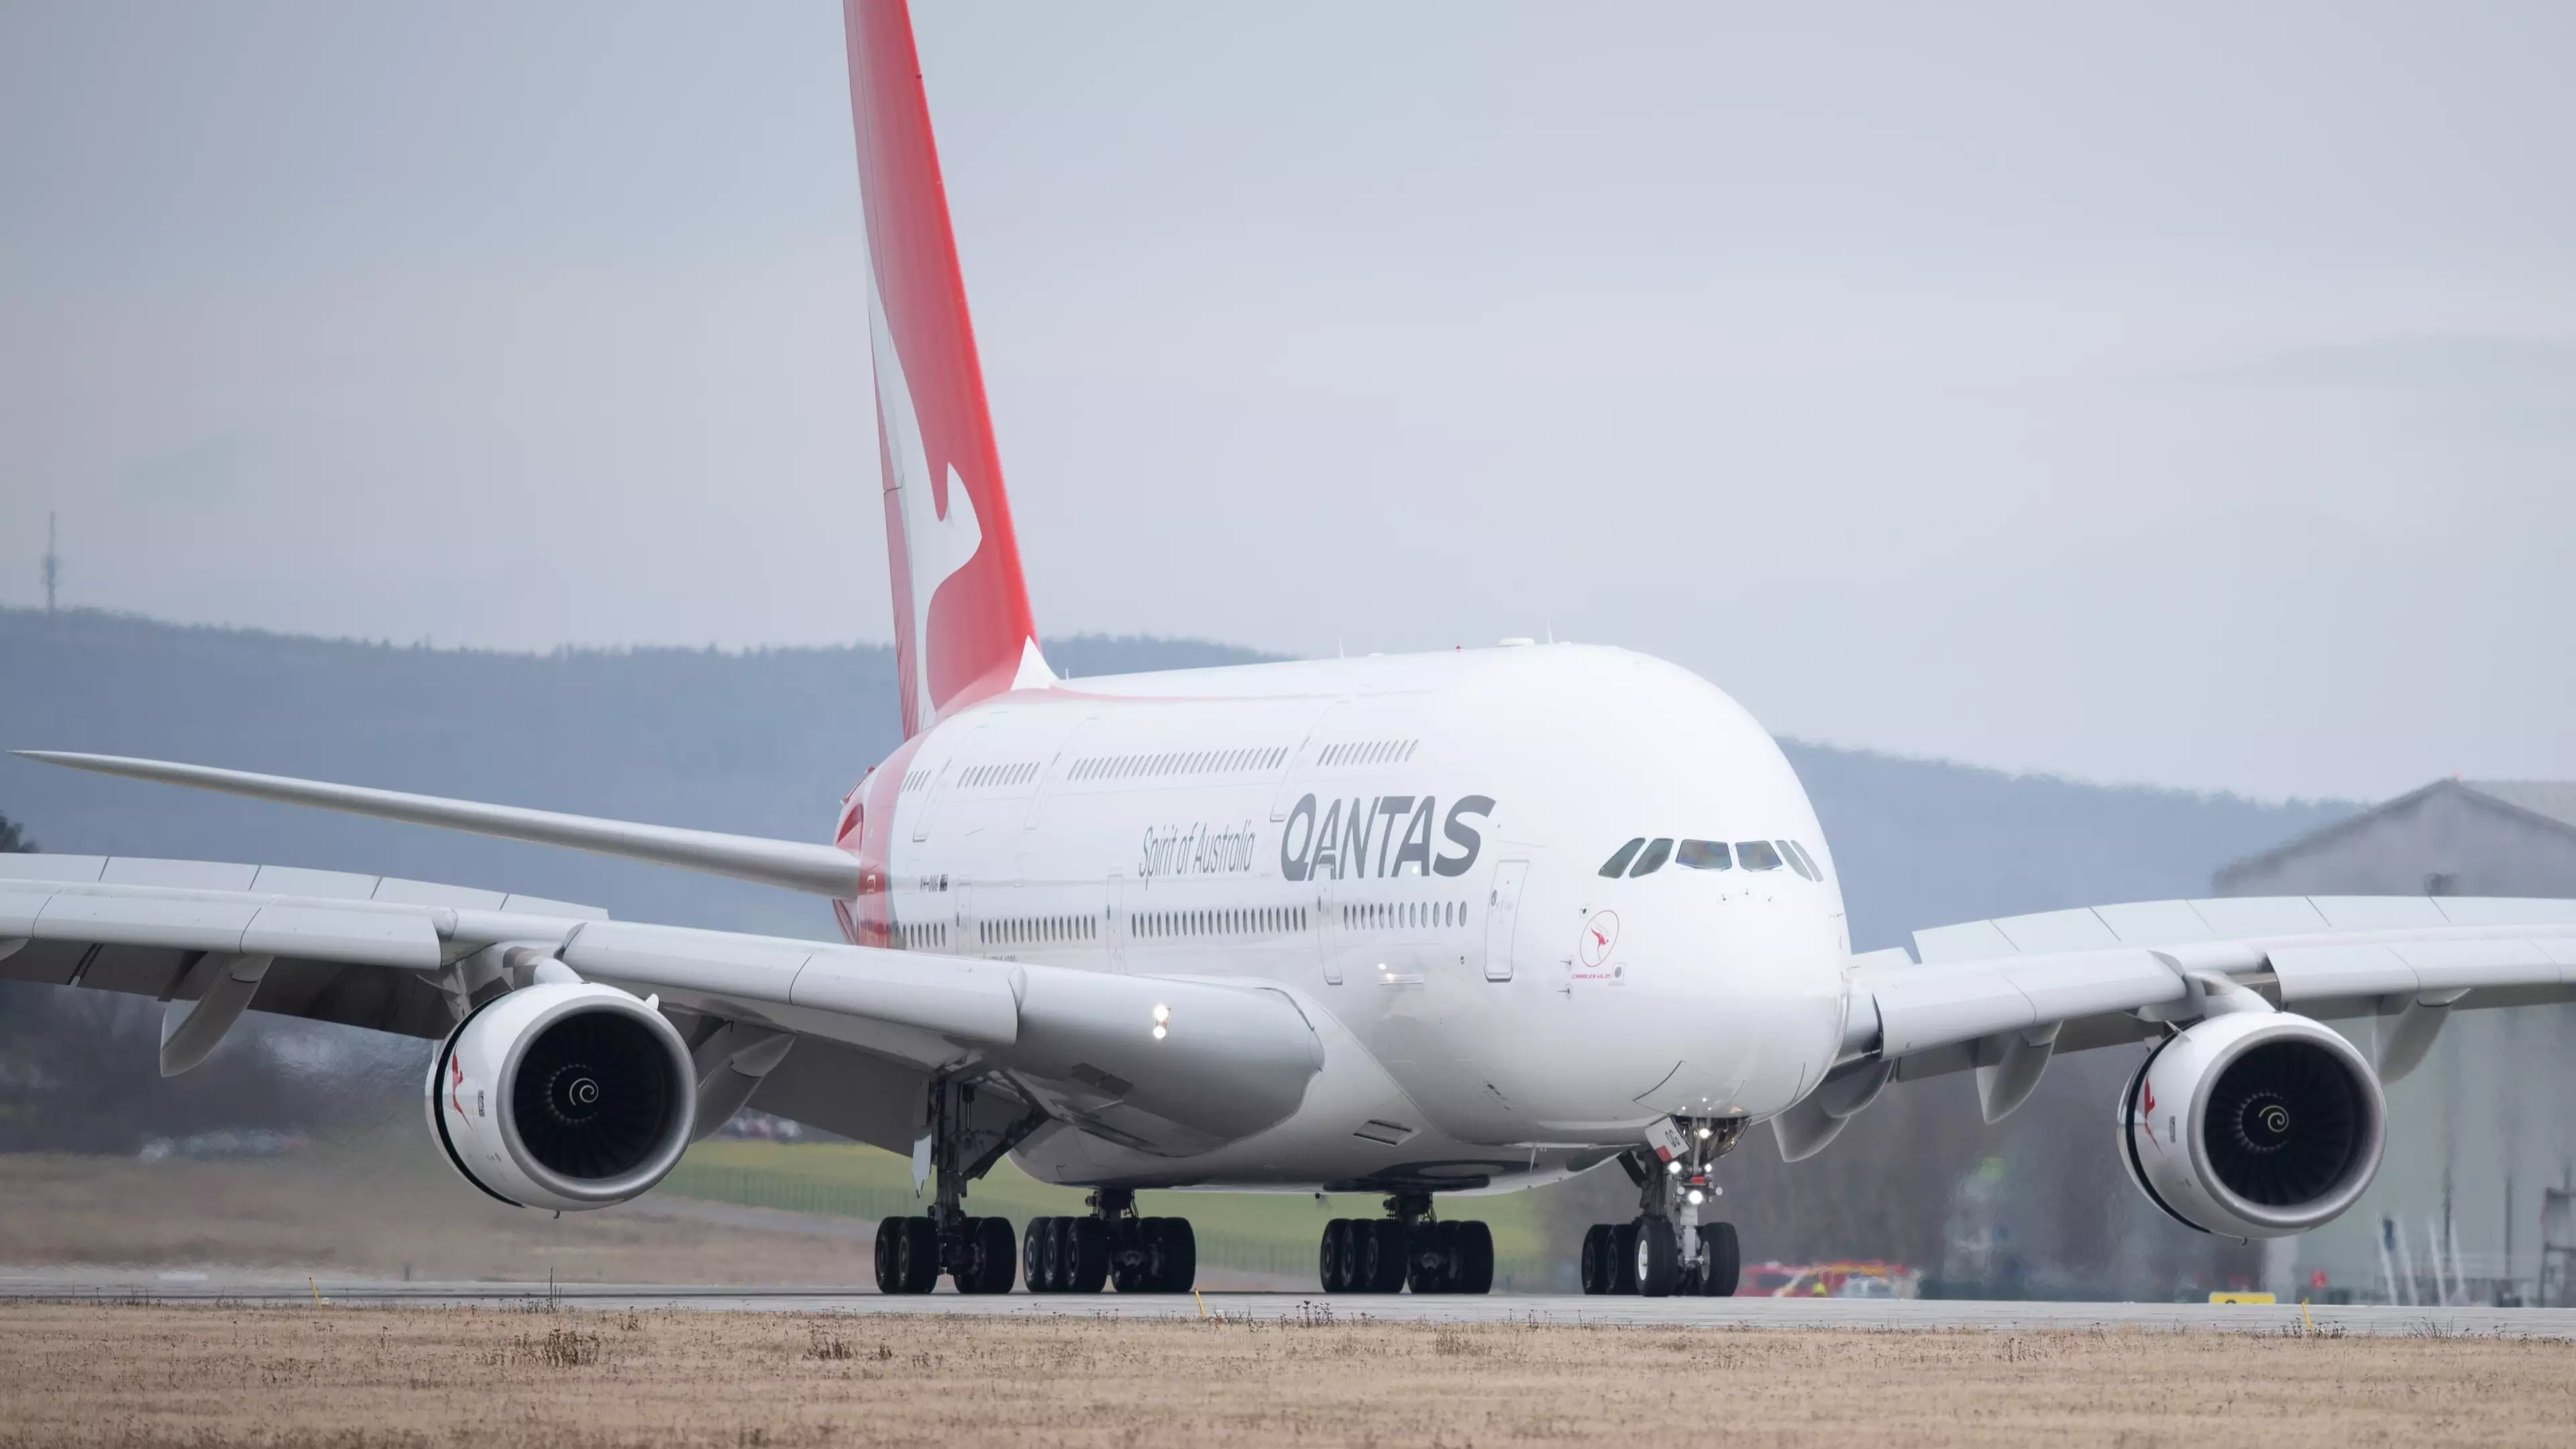 Qantas And Jetstar Cut International Flights By 90% Due To Coronavirus